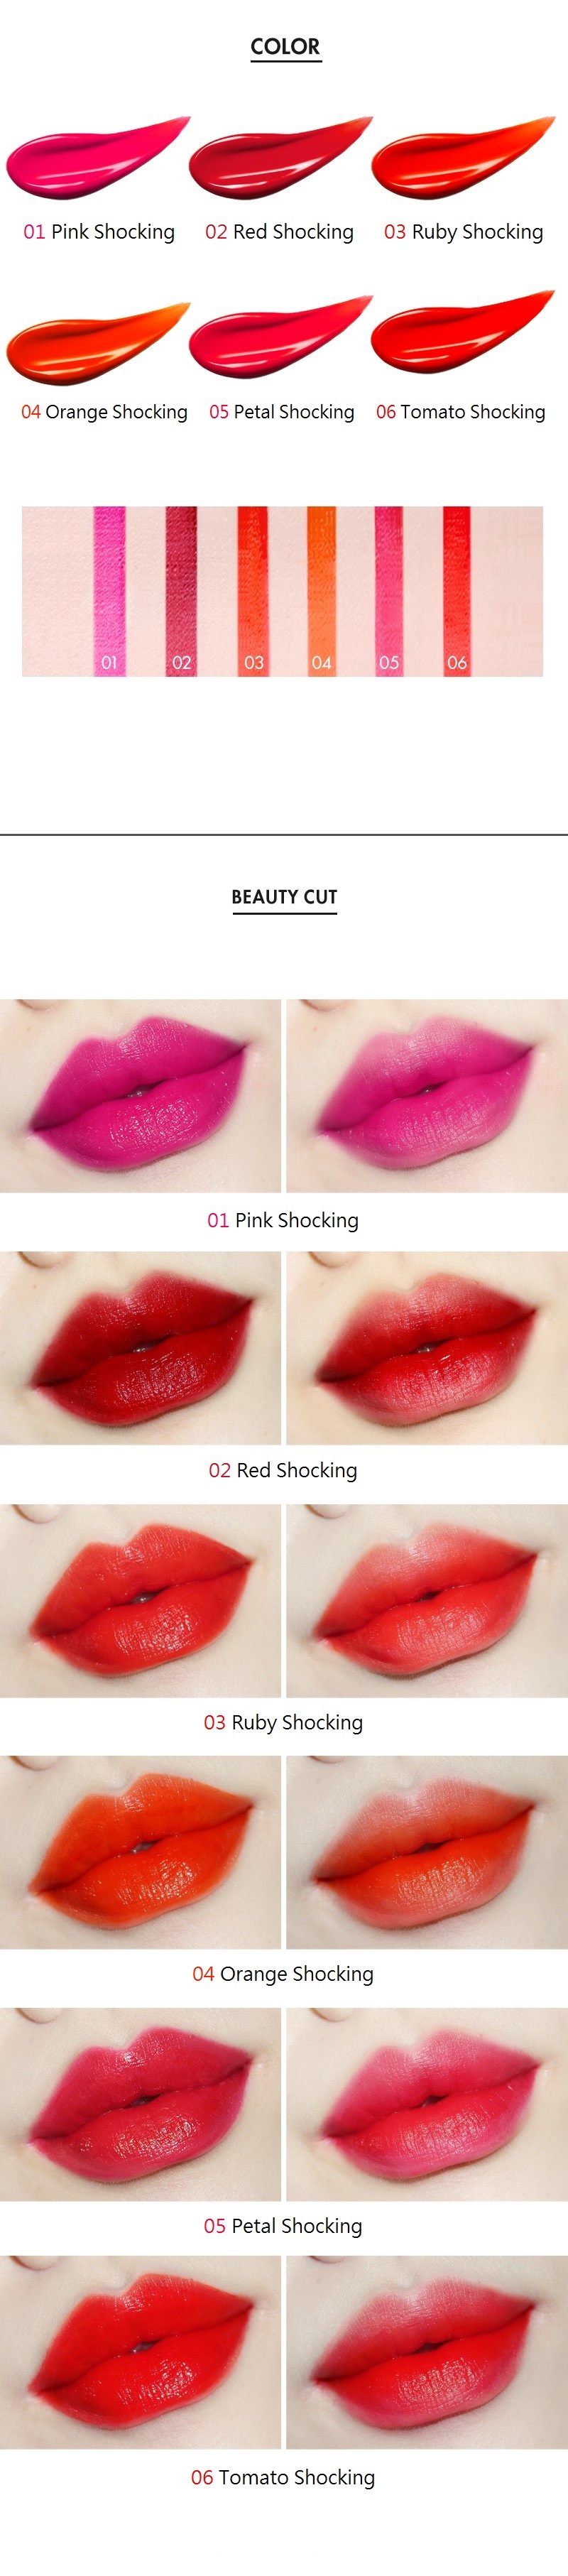 Tonymoly Perfect Lips Shocking Lip Beauty Amora Australias Online K Beauty And J Beauty Store 